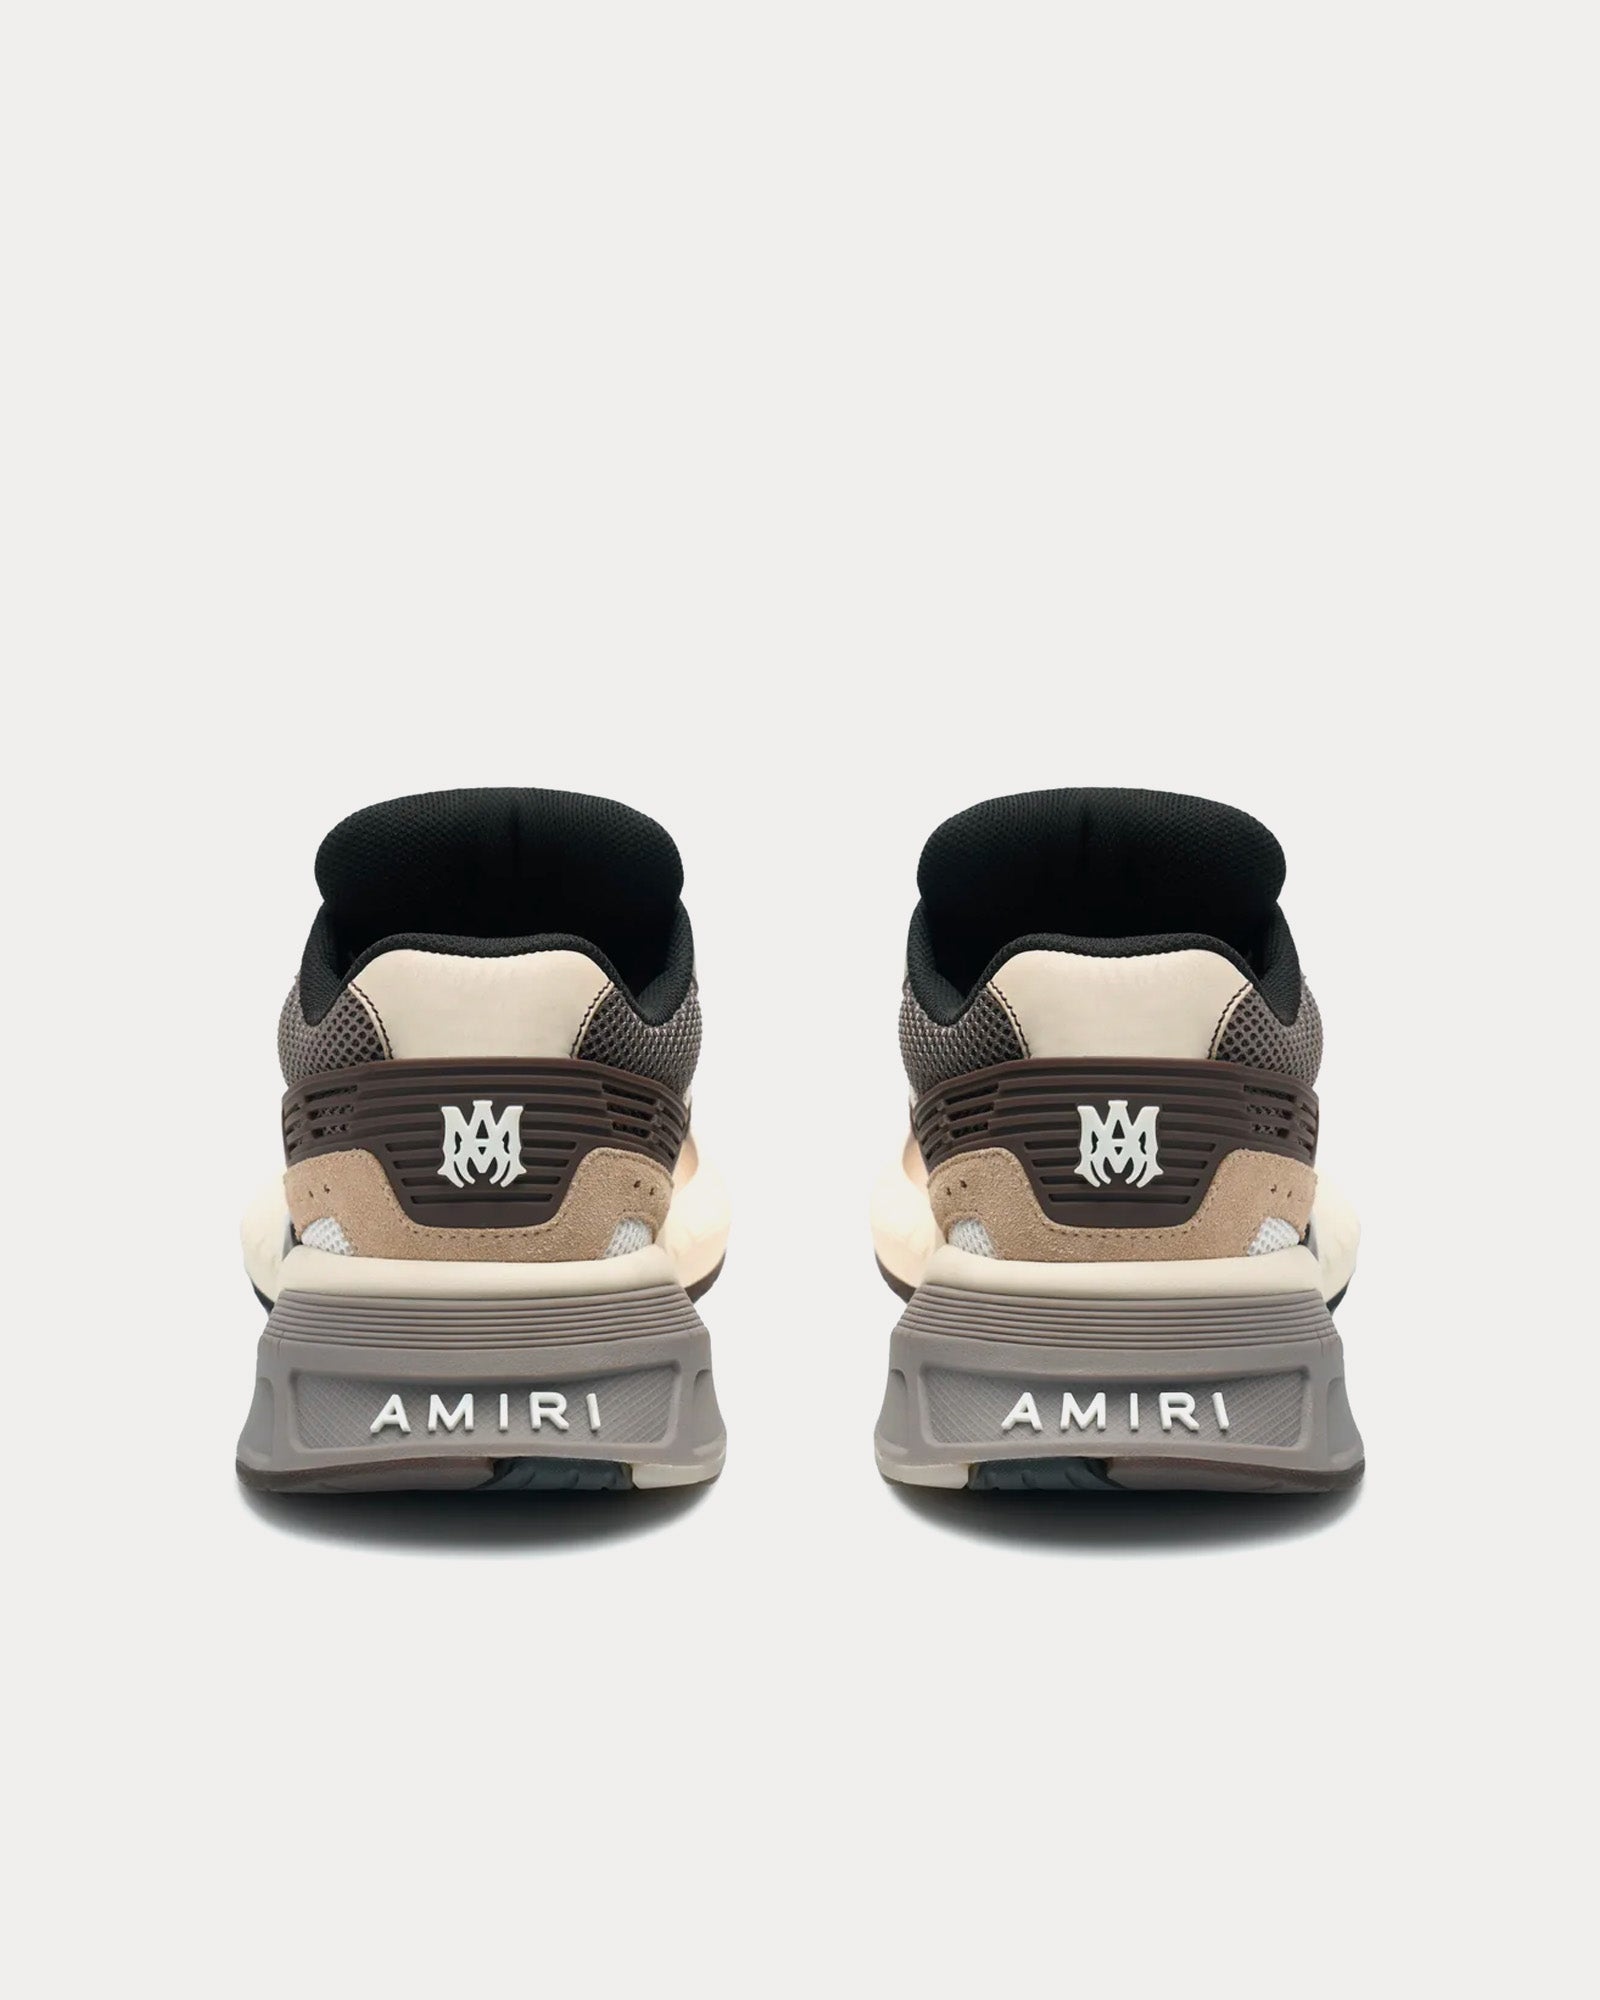 AMIRI - MA Runner Brown Low Top Sneakers